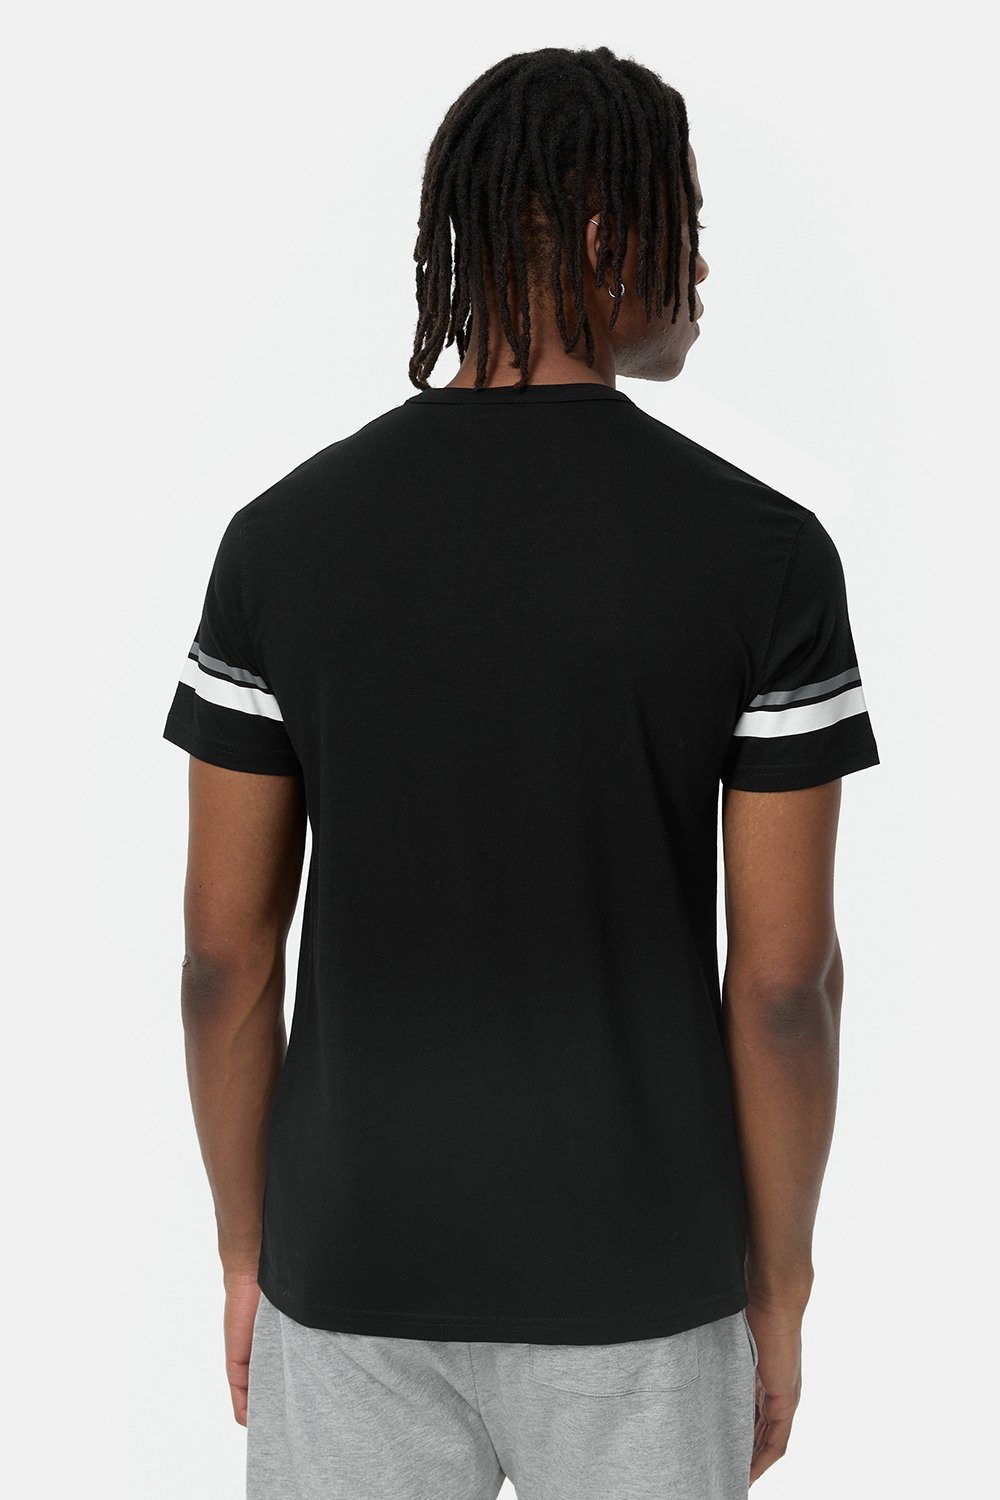 Lonsdale CREICH T-Shirt Black/White/Grey